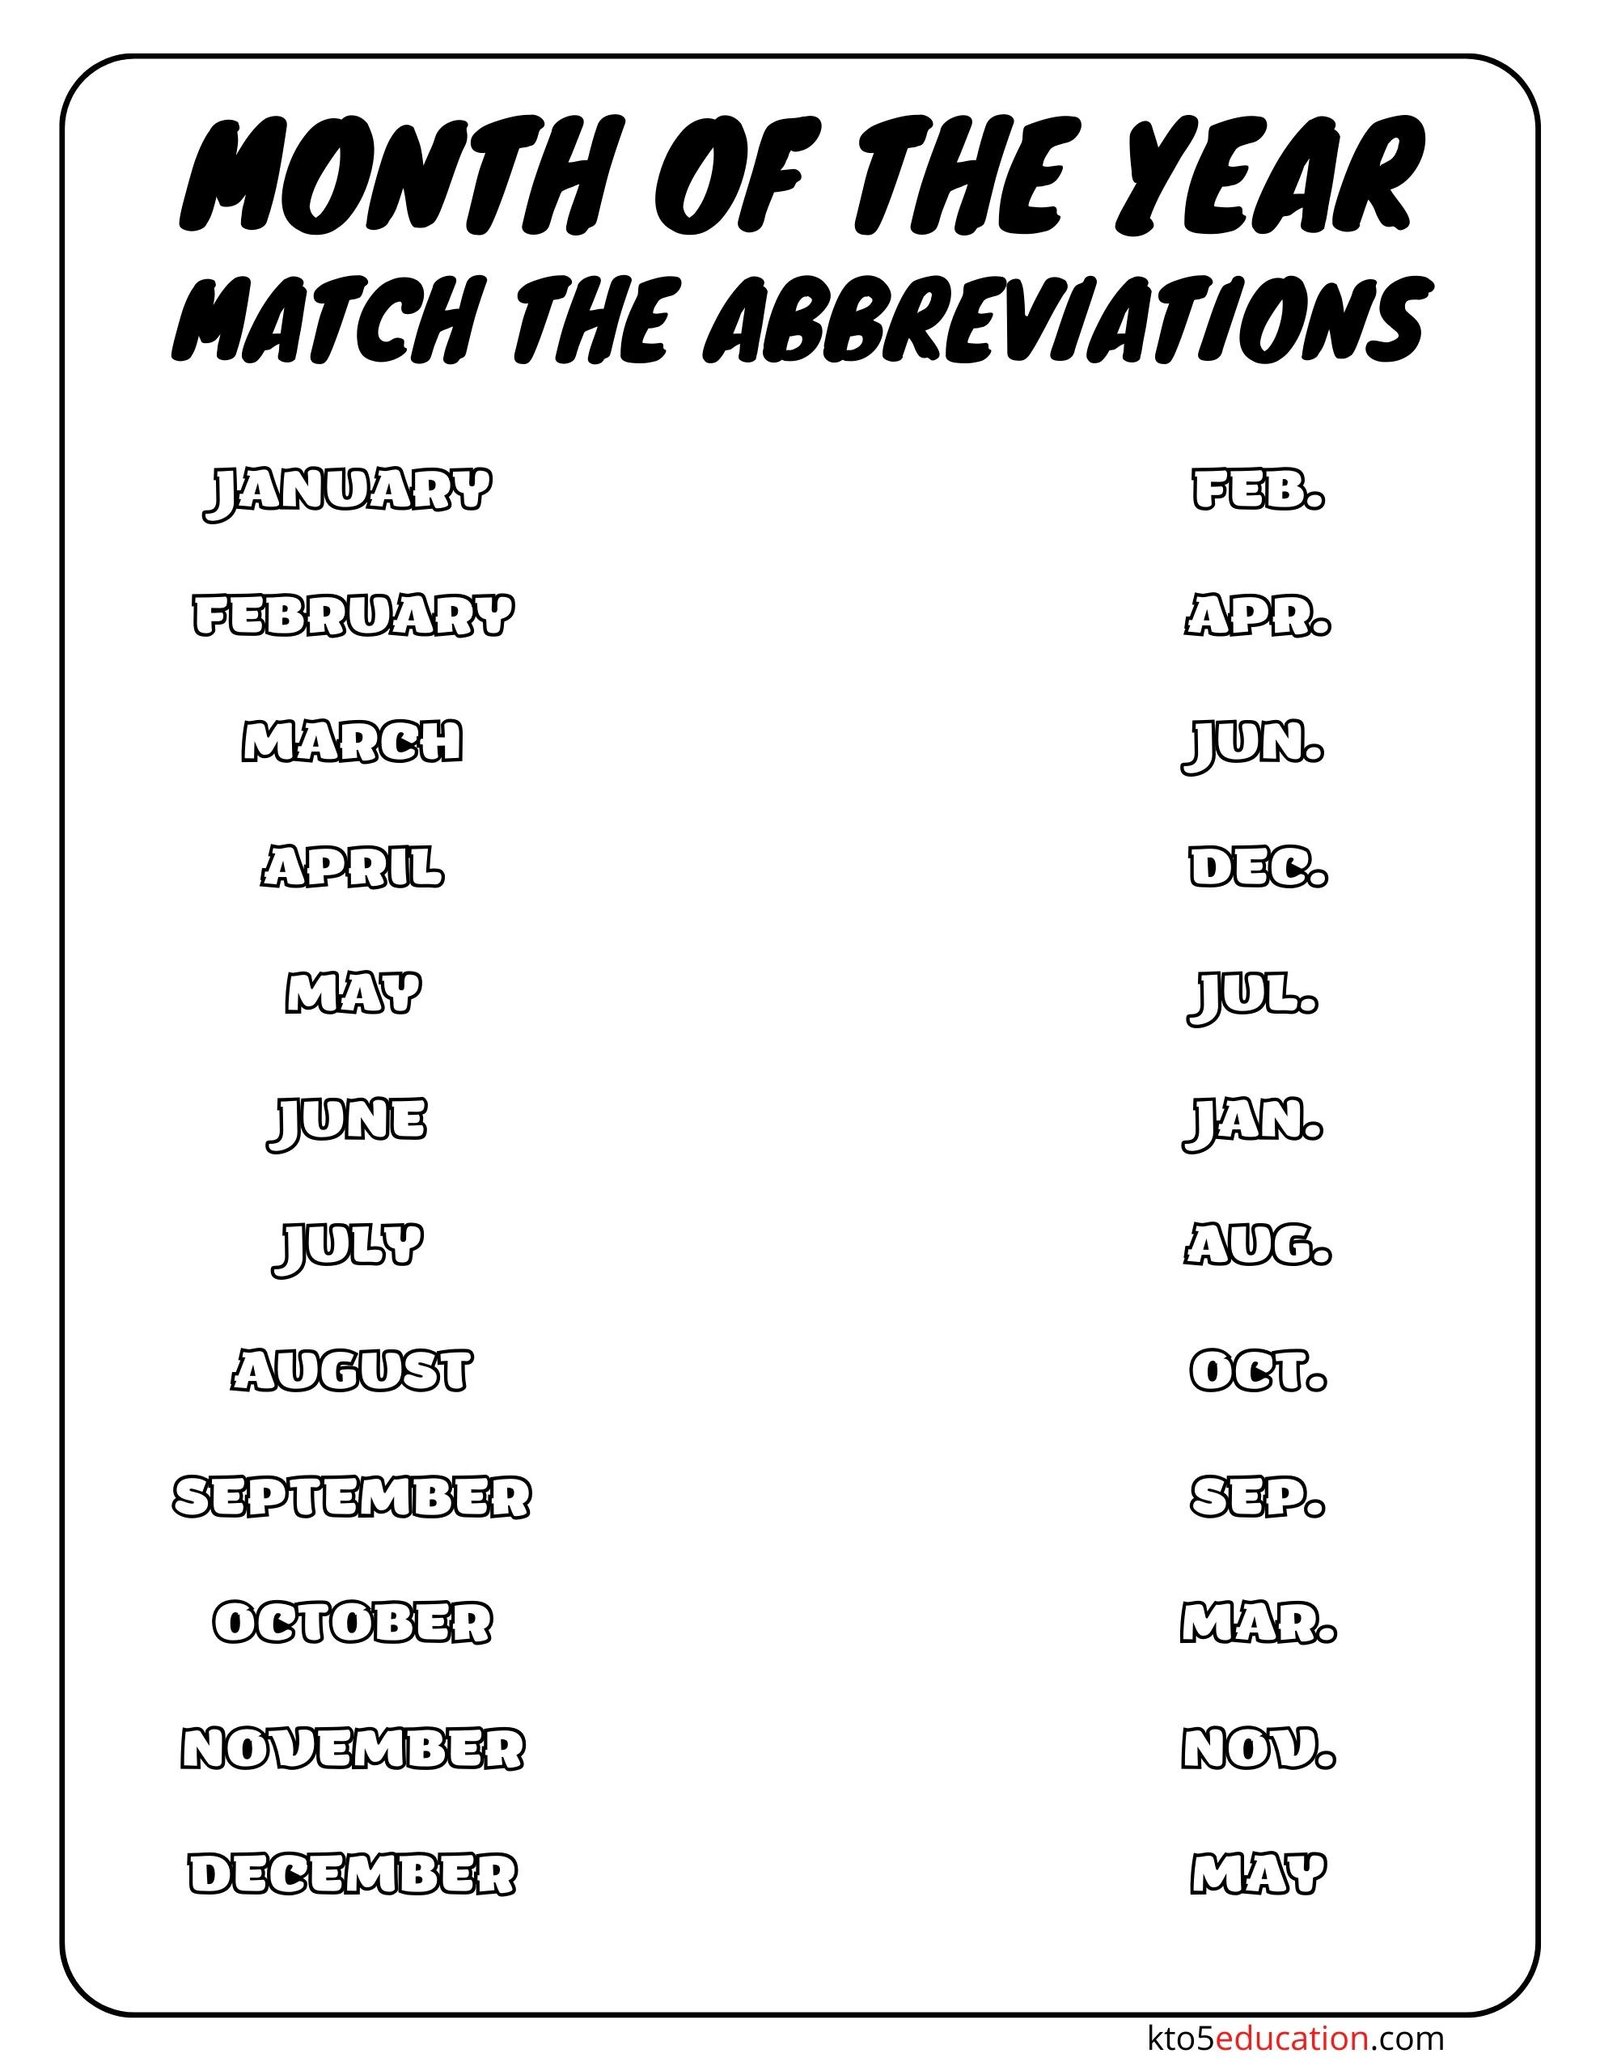 Match The Abbreviations Worksheet